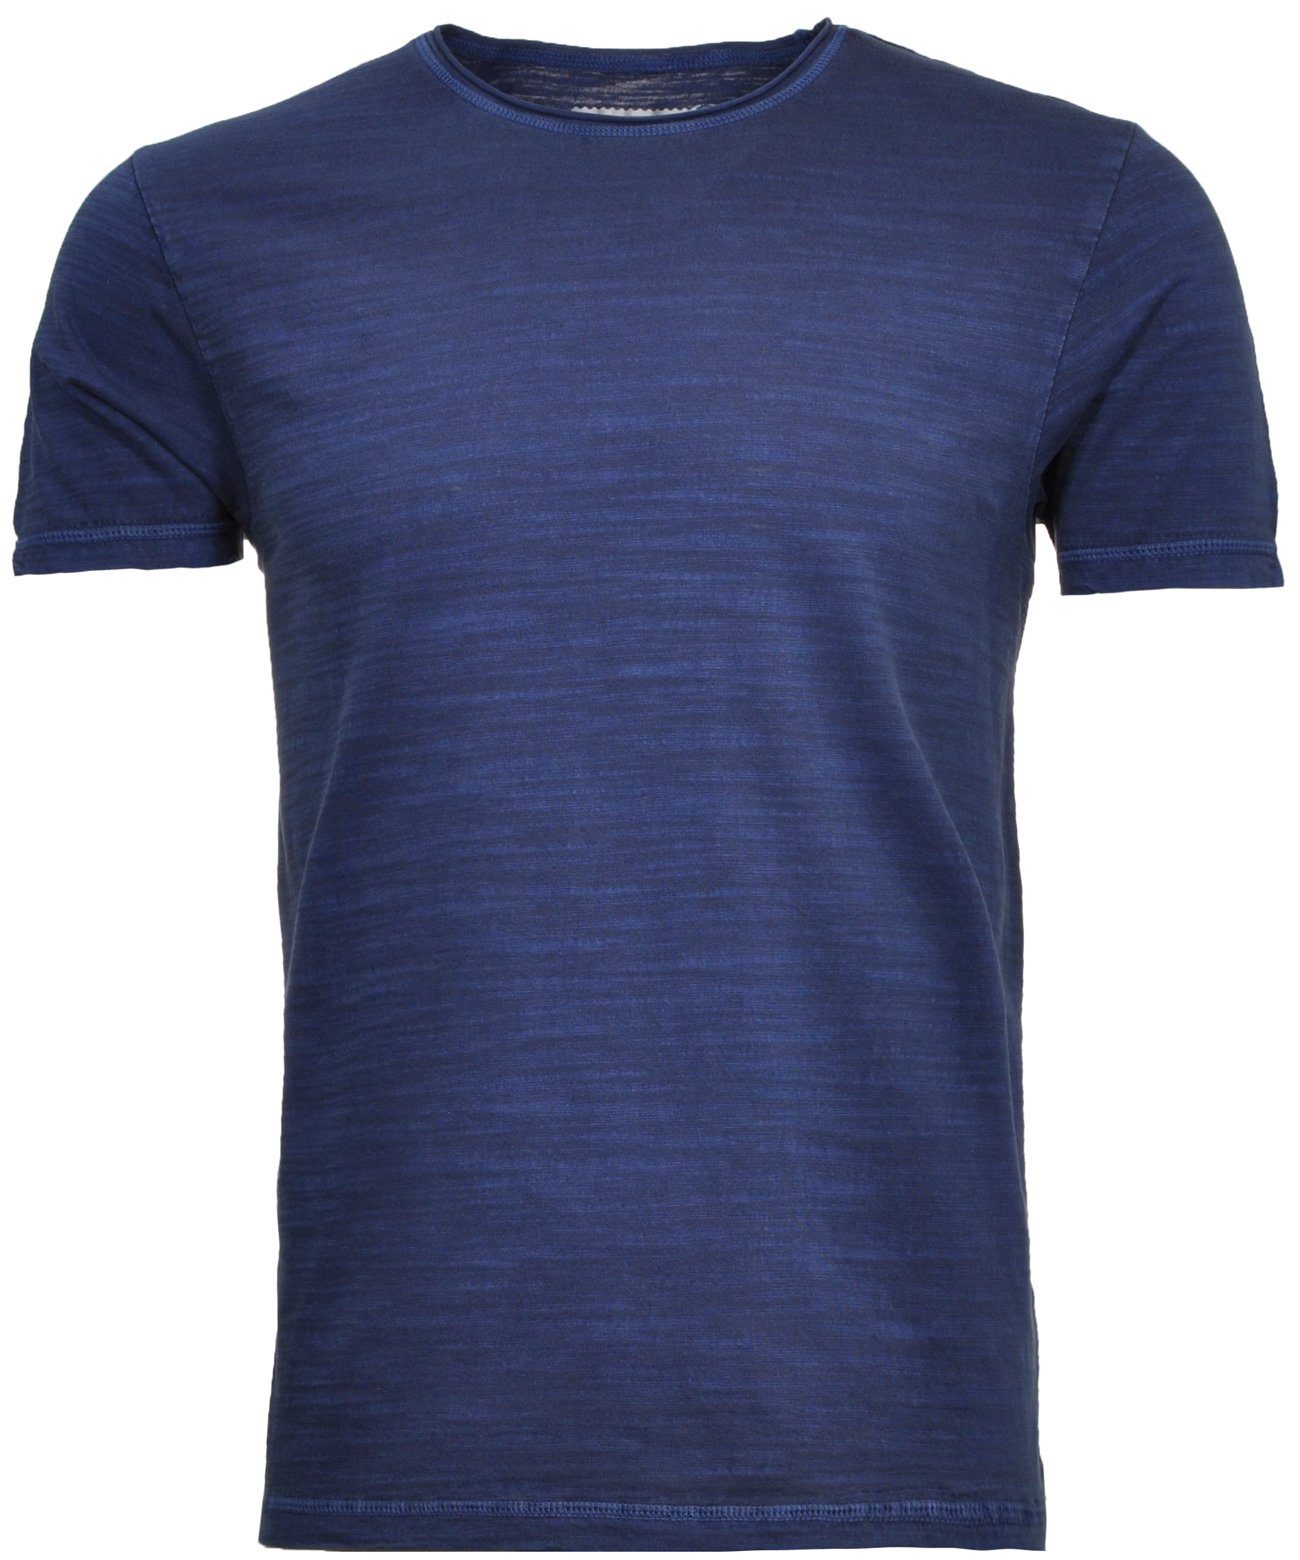 RAGMAN T-Shirt Nachtblau